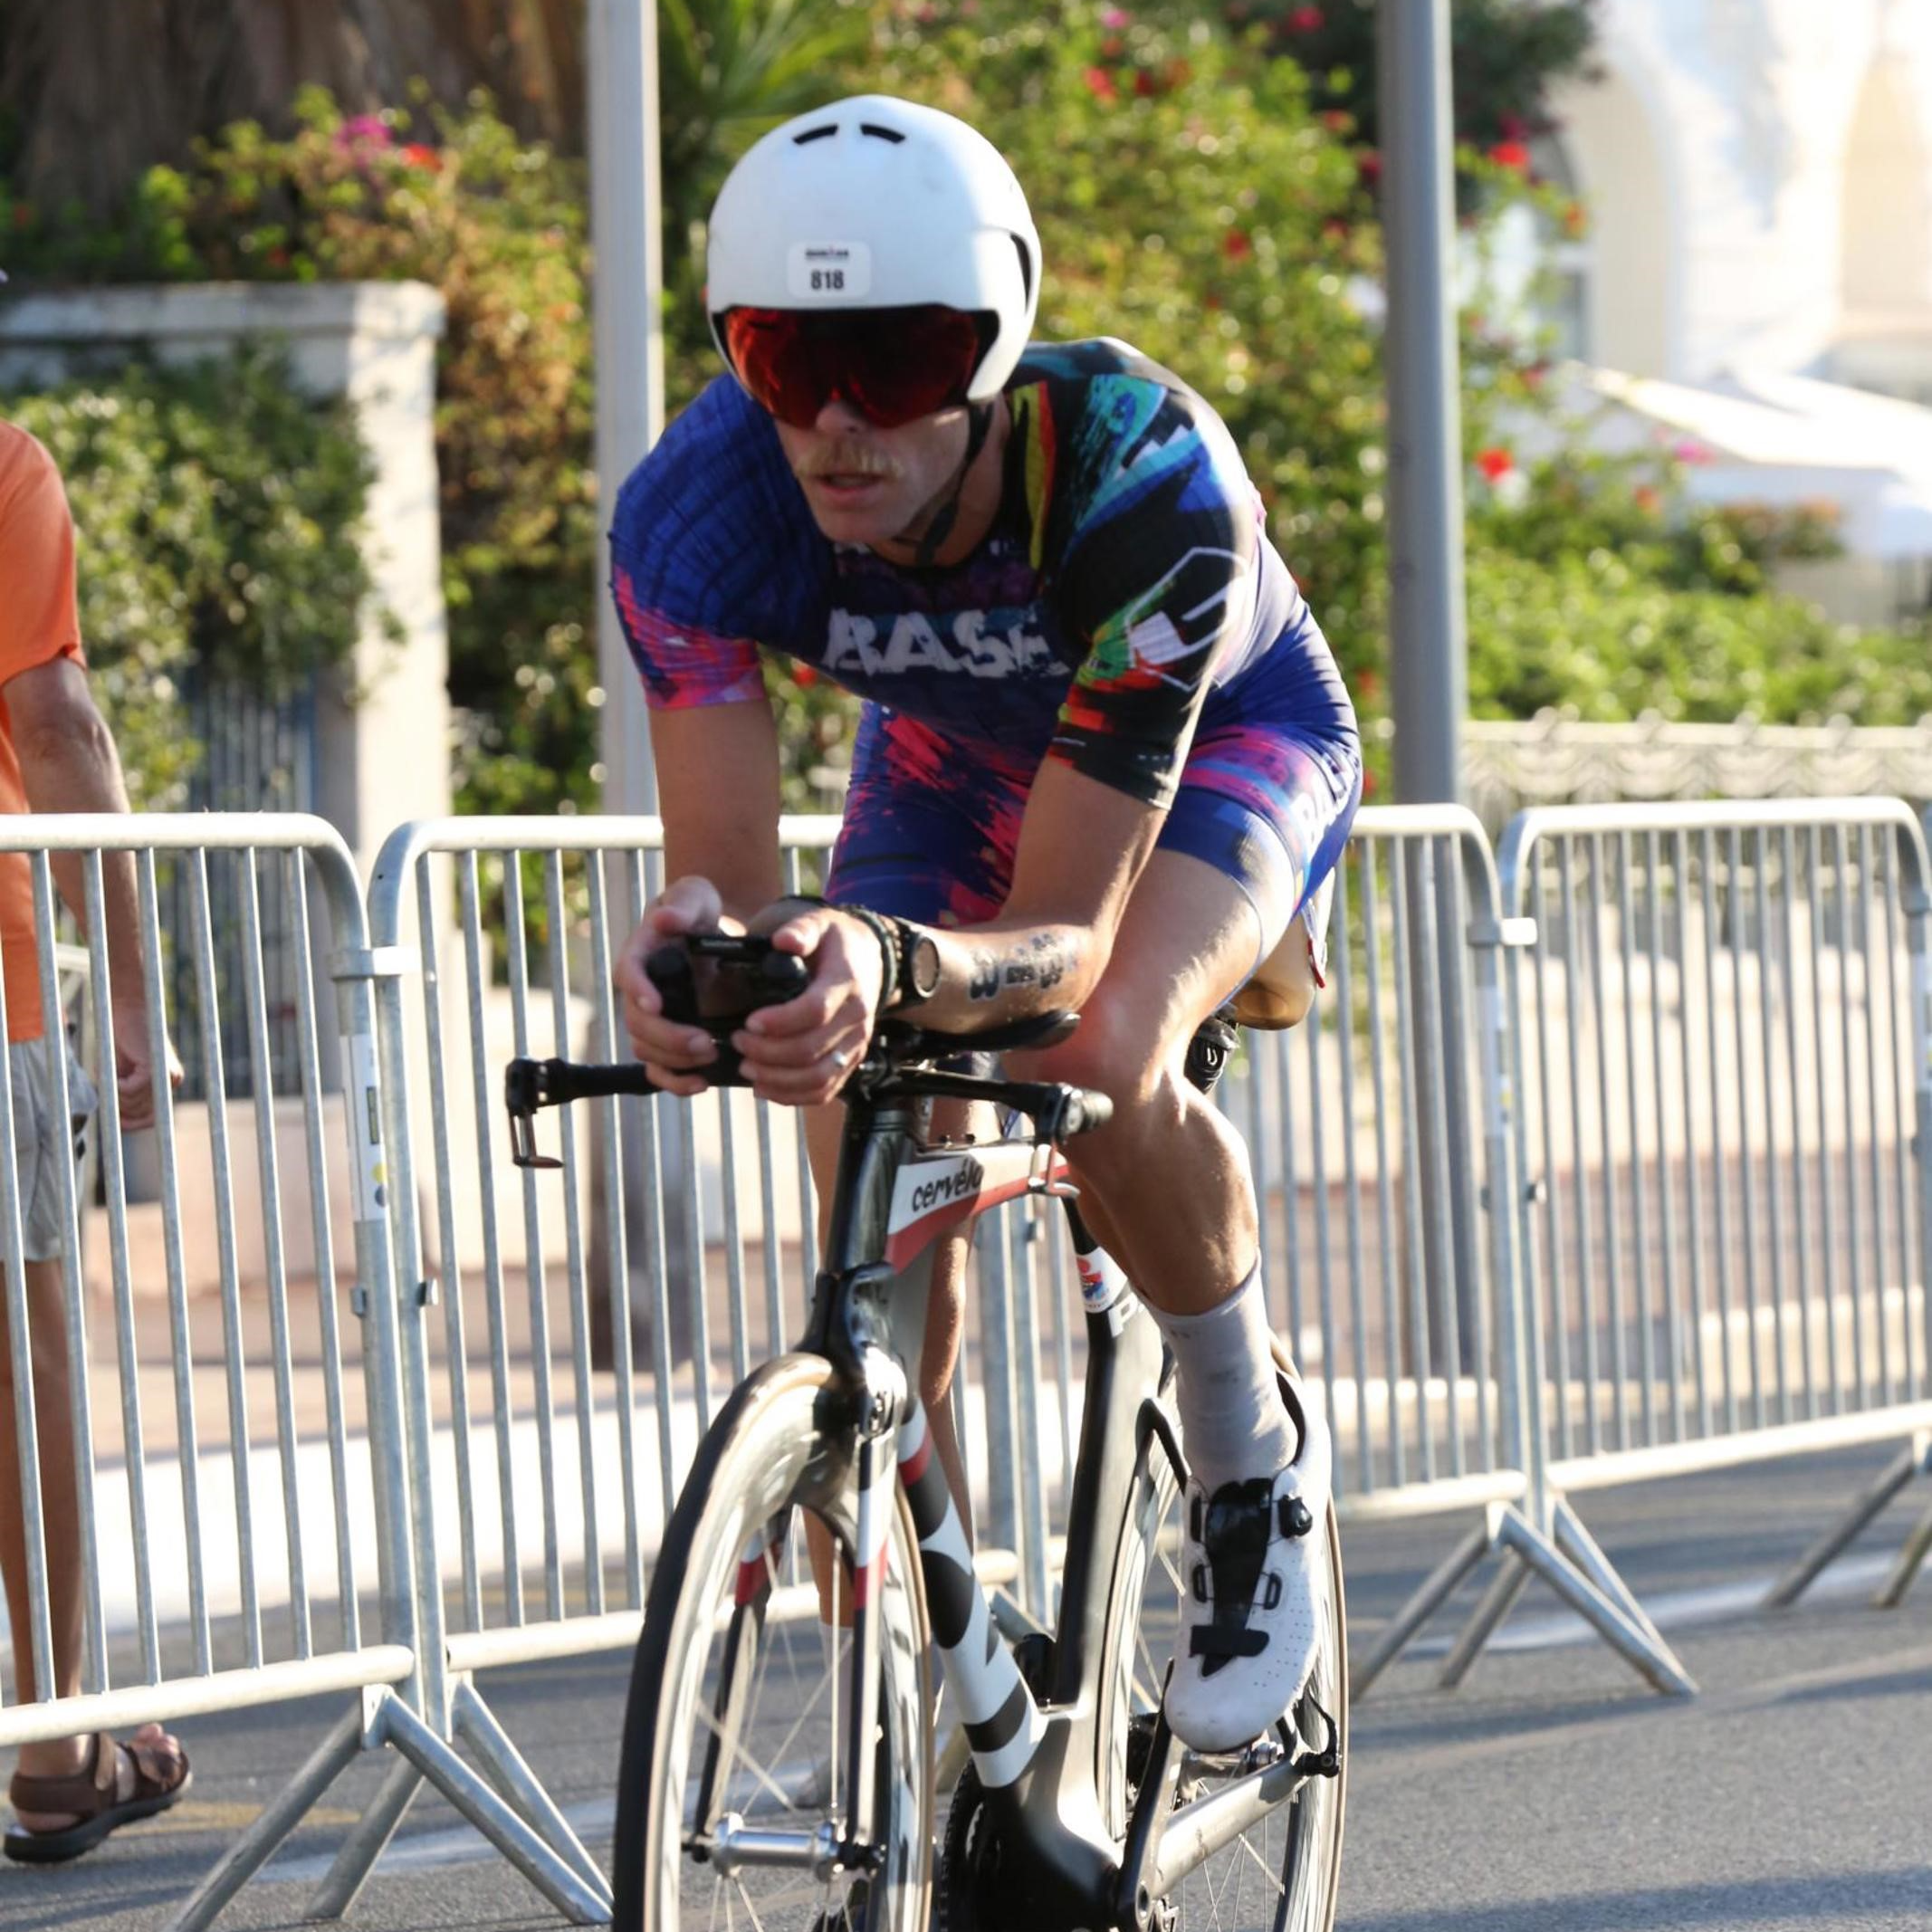  El Roble's Ironman: Chris Depew's Triumphant Race in Nice, France!